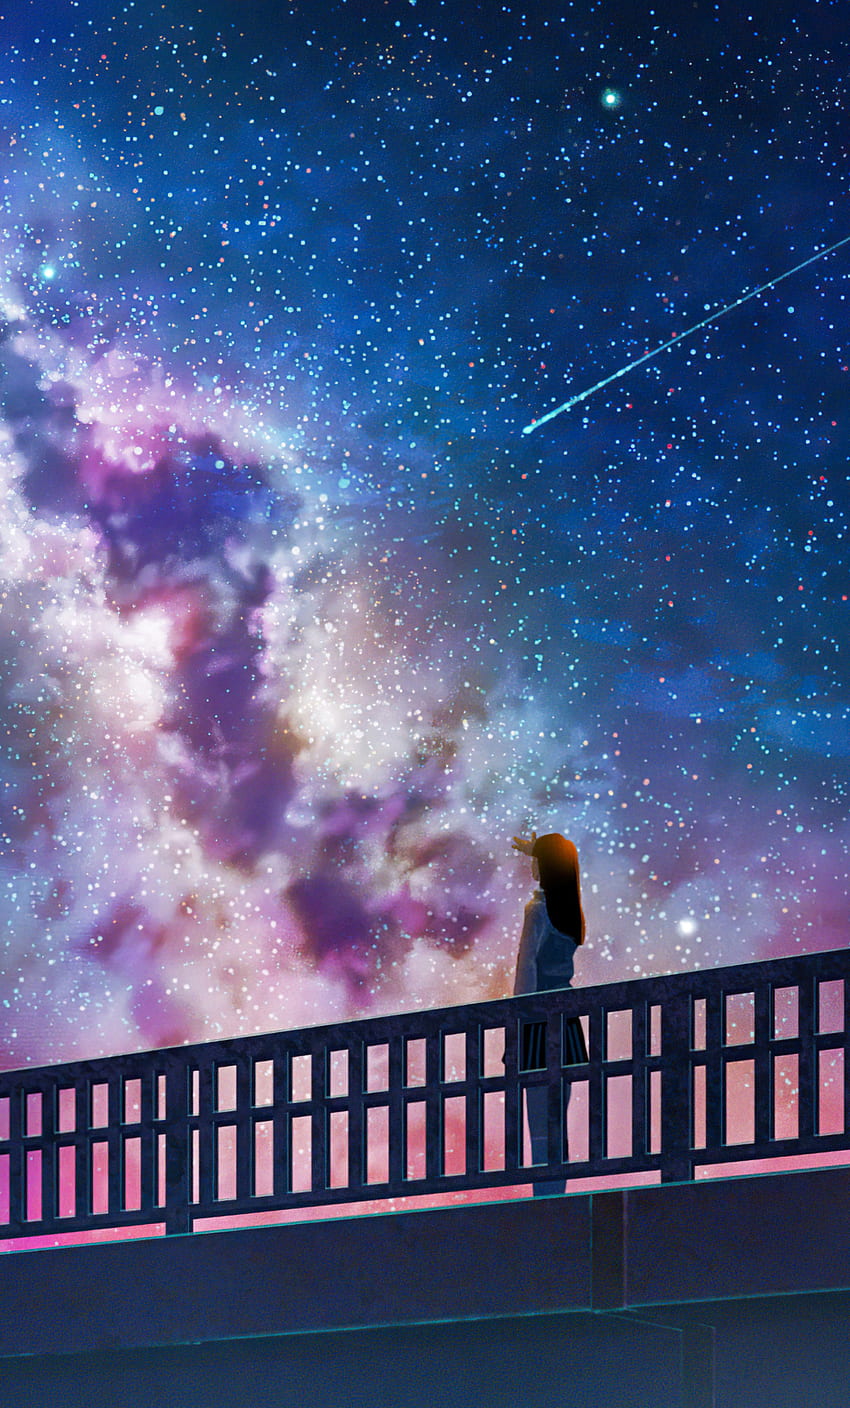 Anime Girl Alone At Bridge Watching The Galaxy Full Of Stars iPhone , , Background et, Anime Purple Galaxy Fond d'écran de téléphone HD